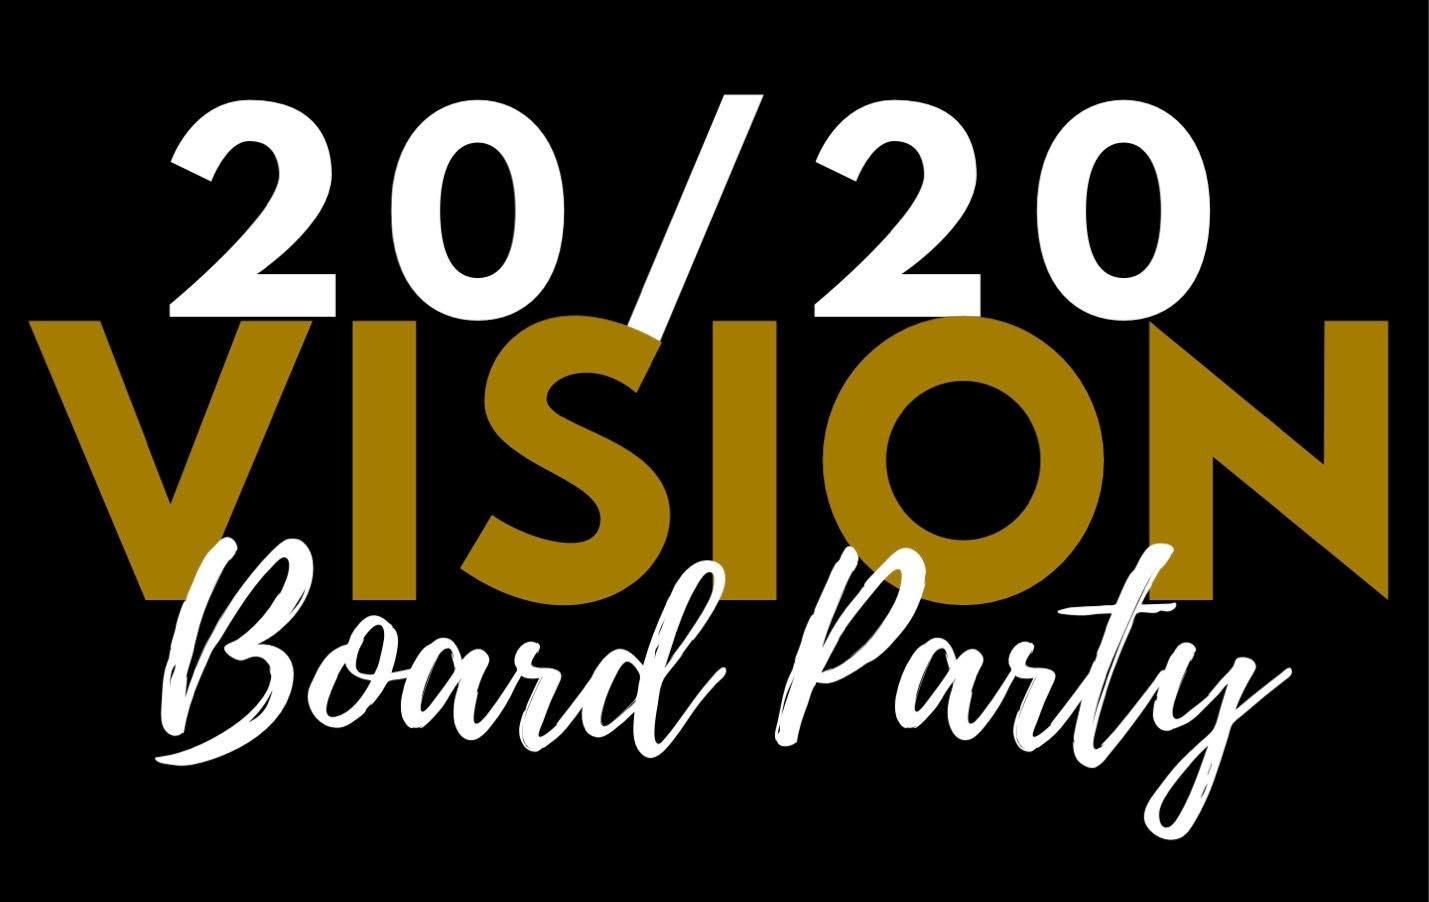 2020 Vision Board Party & Homebuyer Seminar